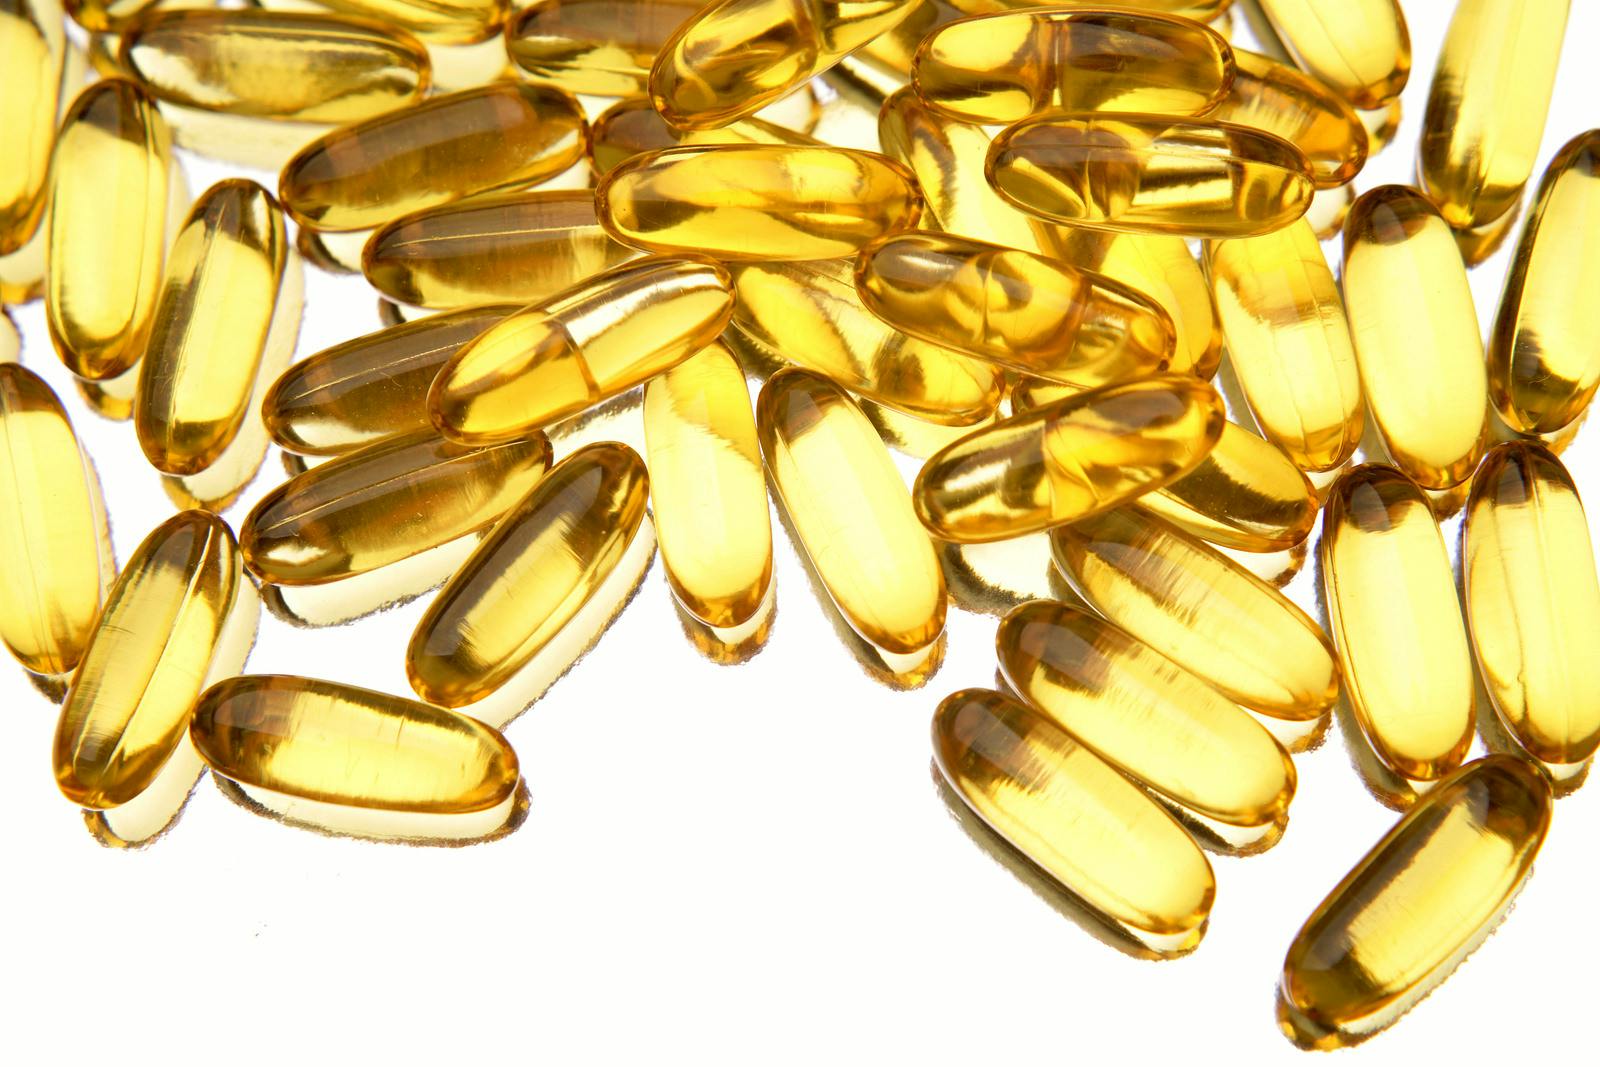 quality fish oil capsules provide omega-3s